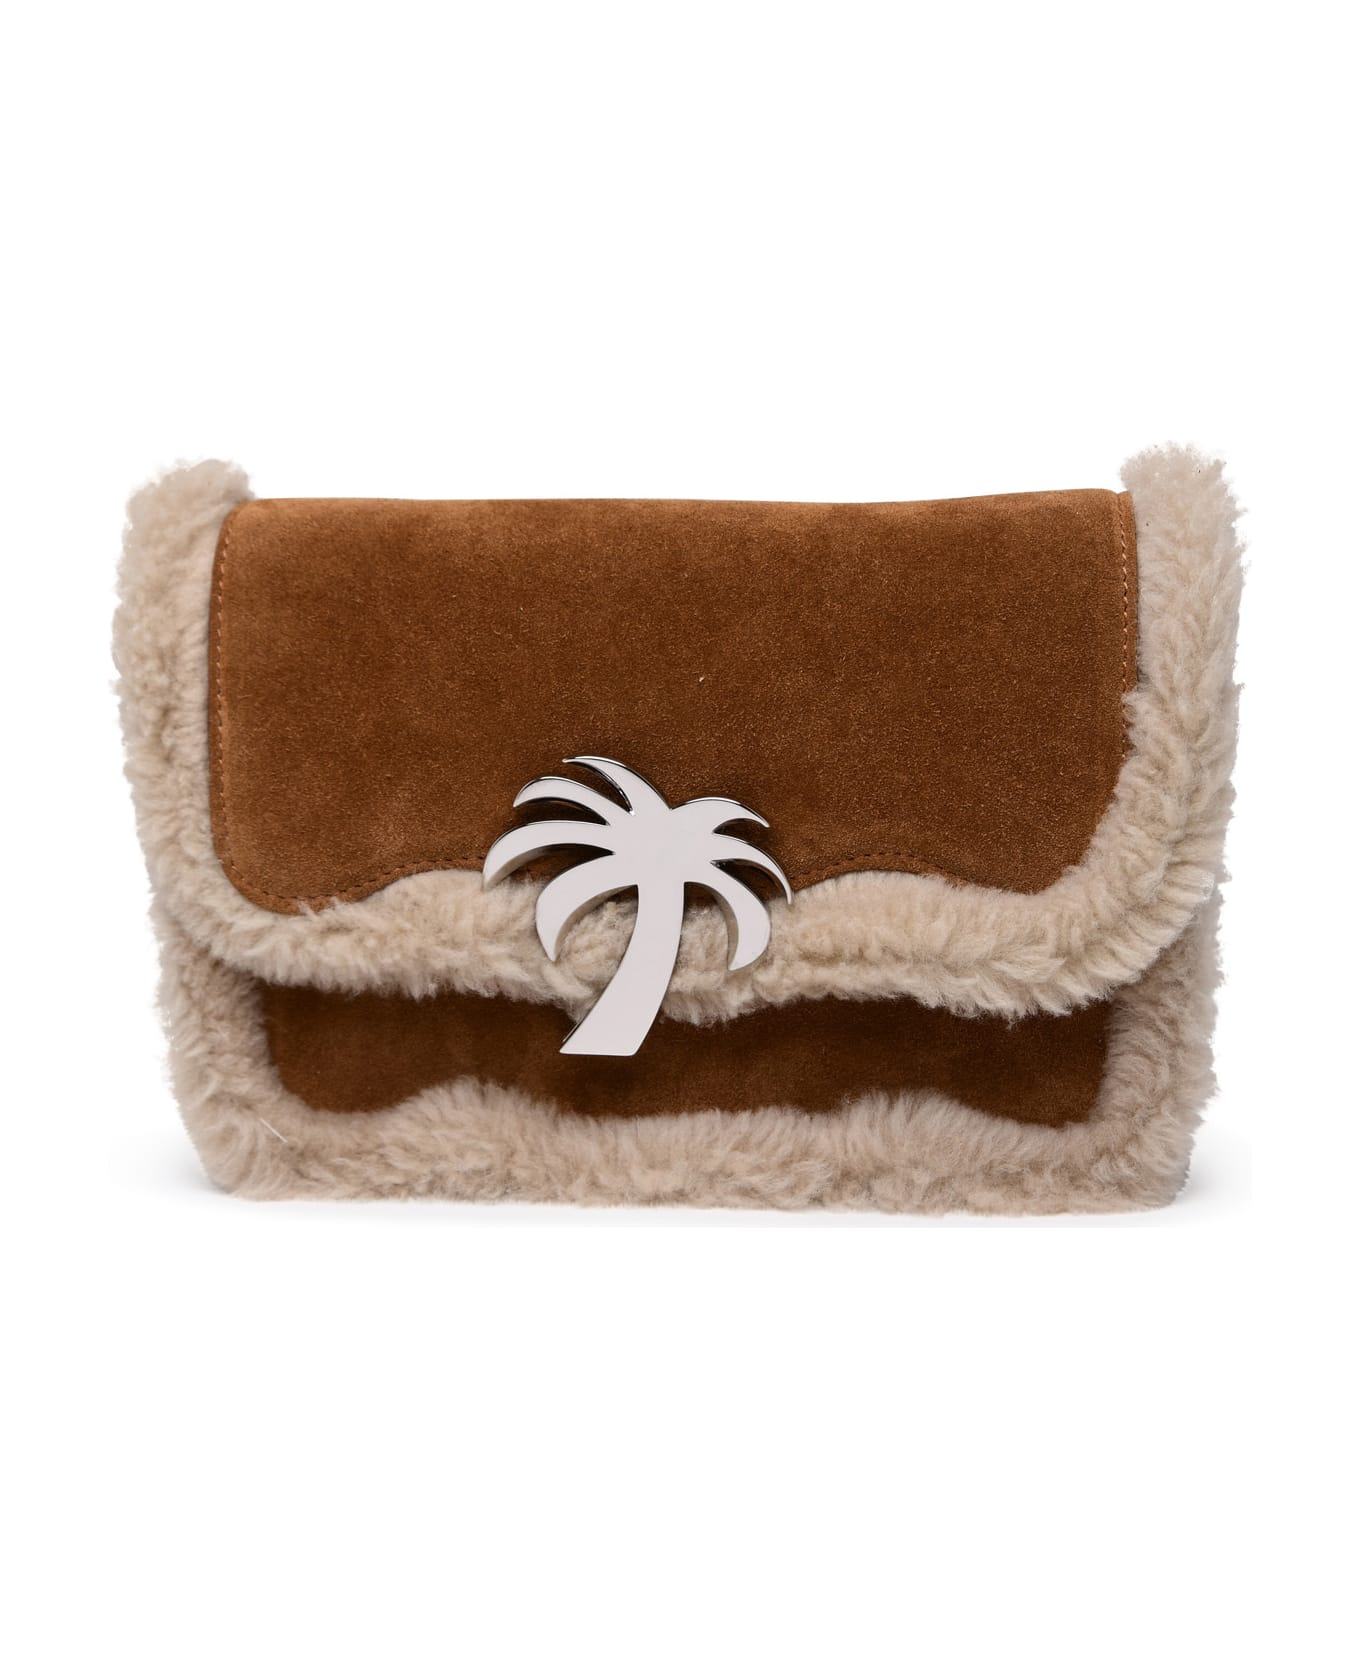 Palm Angels 'palm Beach' Bag In Beige Suede - Brown